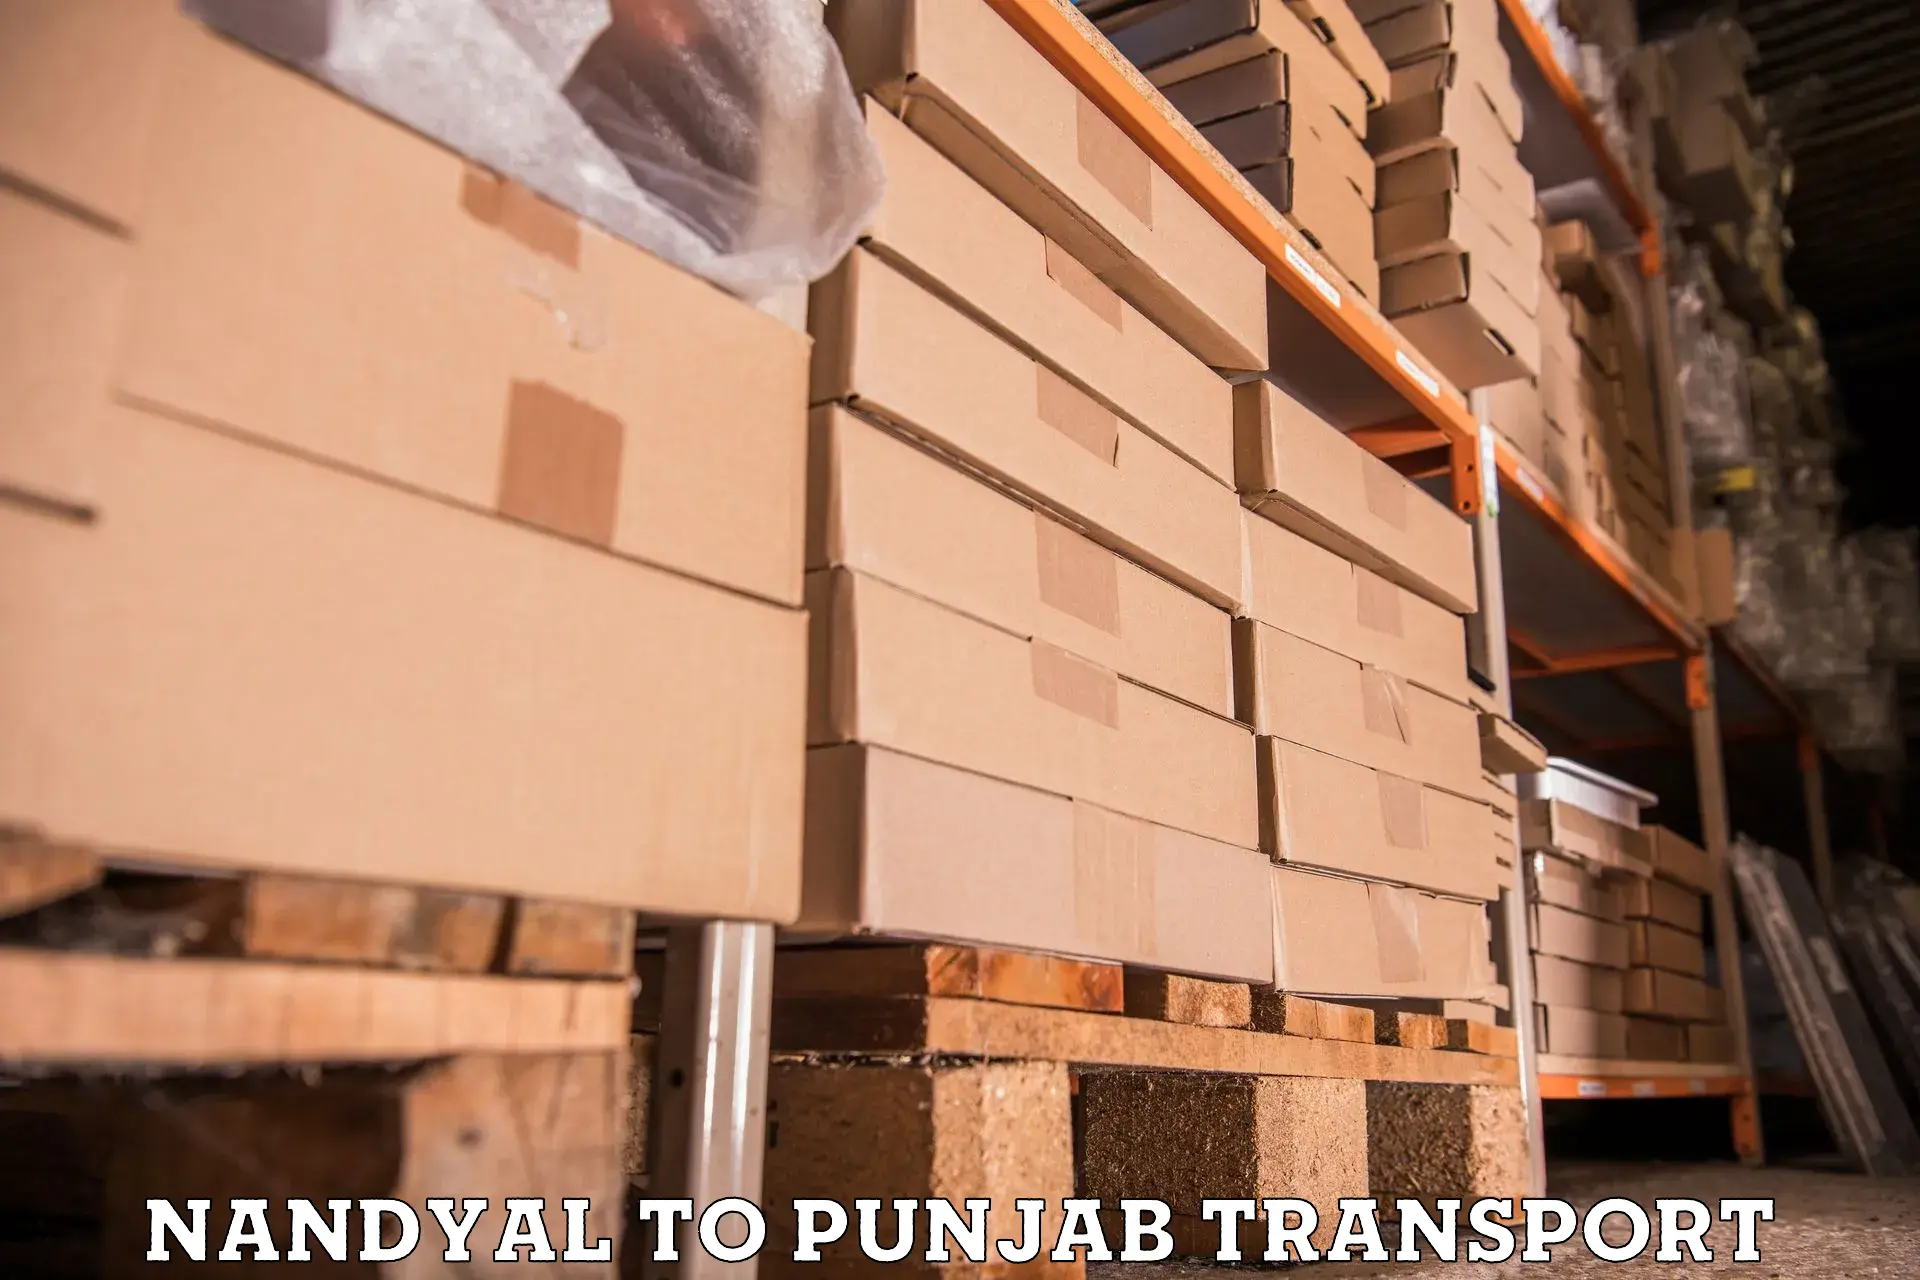 Delivery service Nandyal to Dhuri